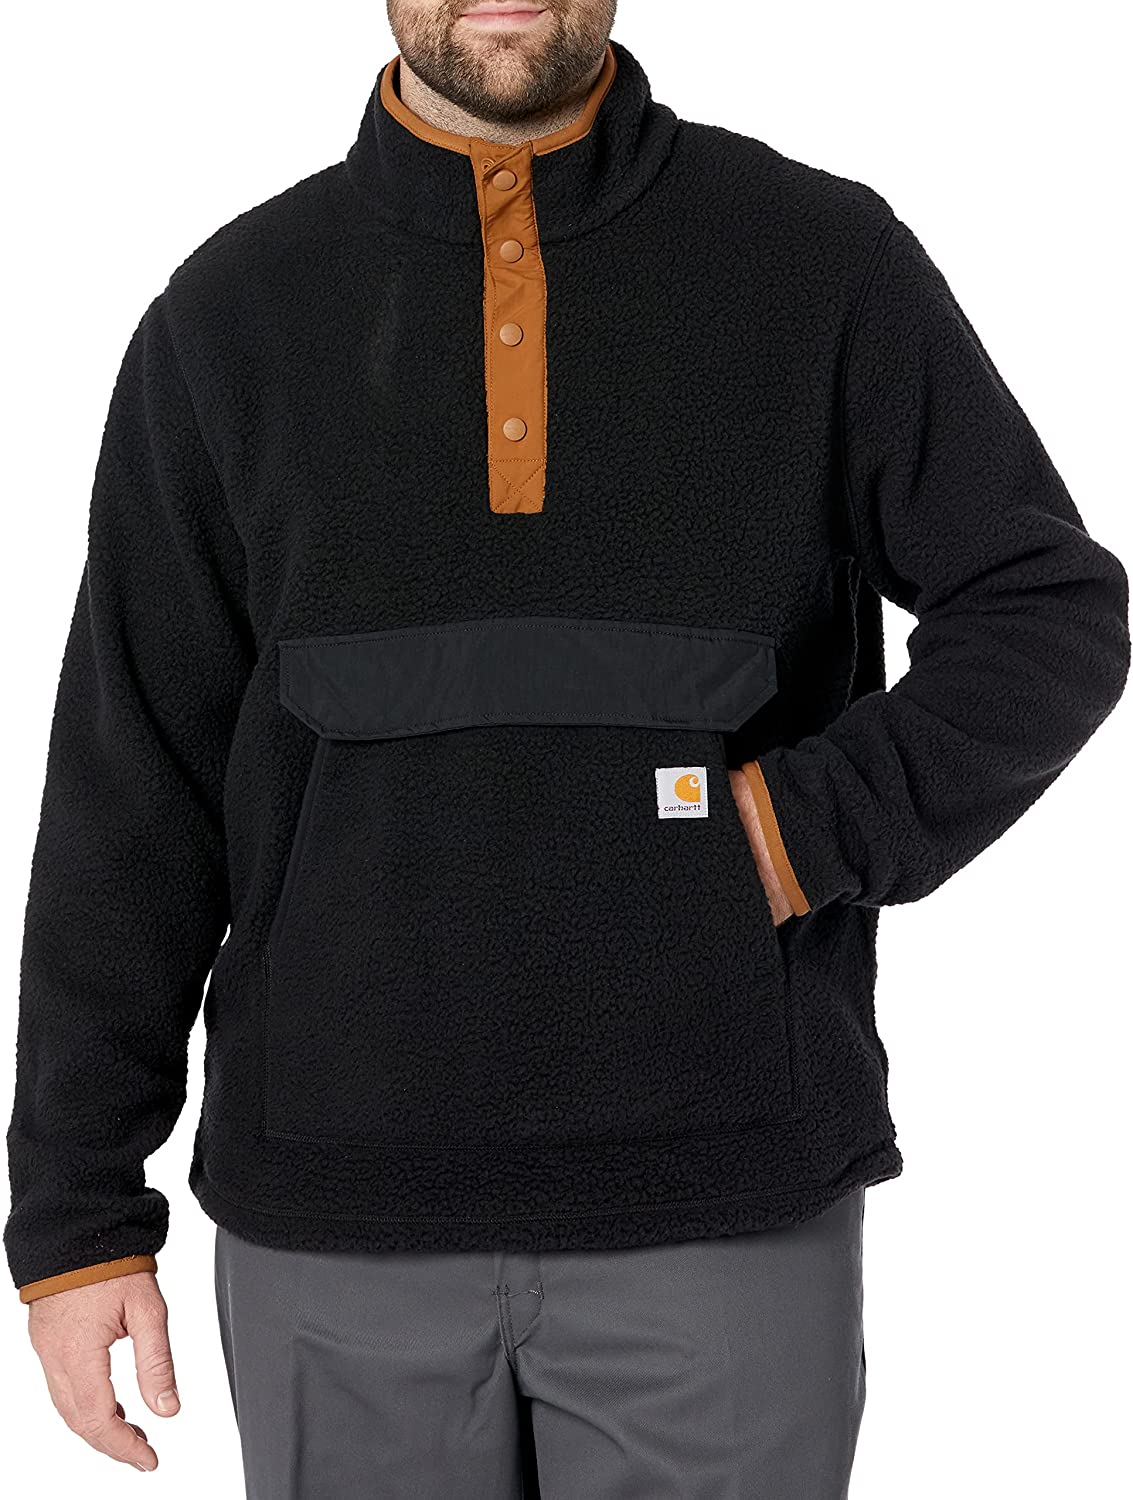 Carhartt Men's Relaxed Fit Fleece Pullover | eBay